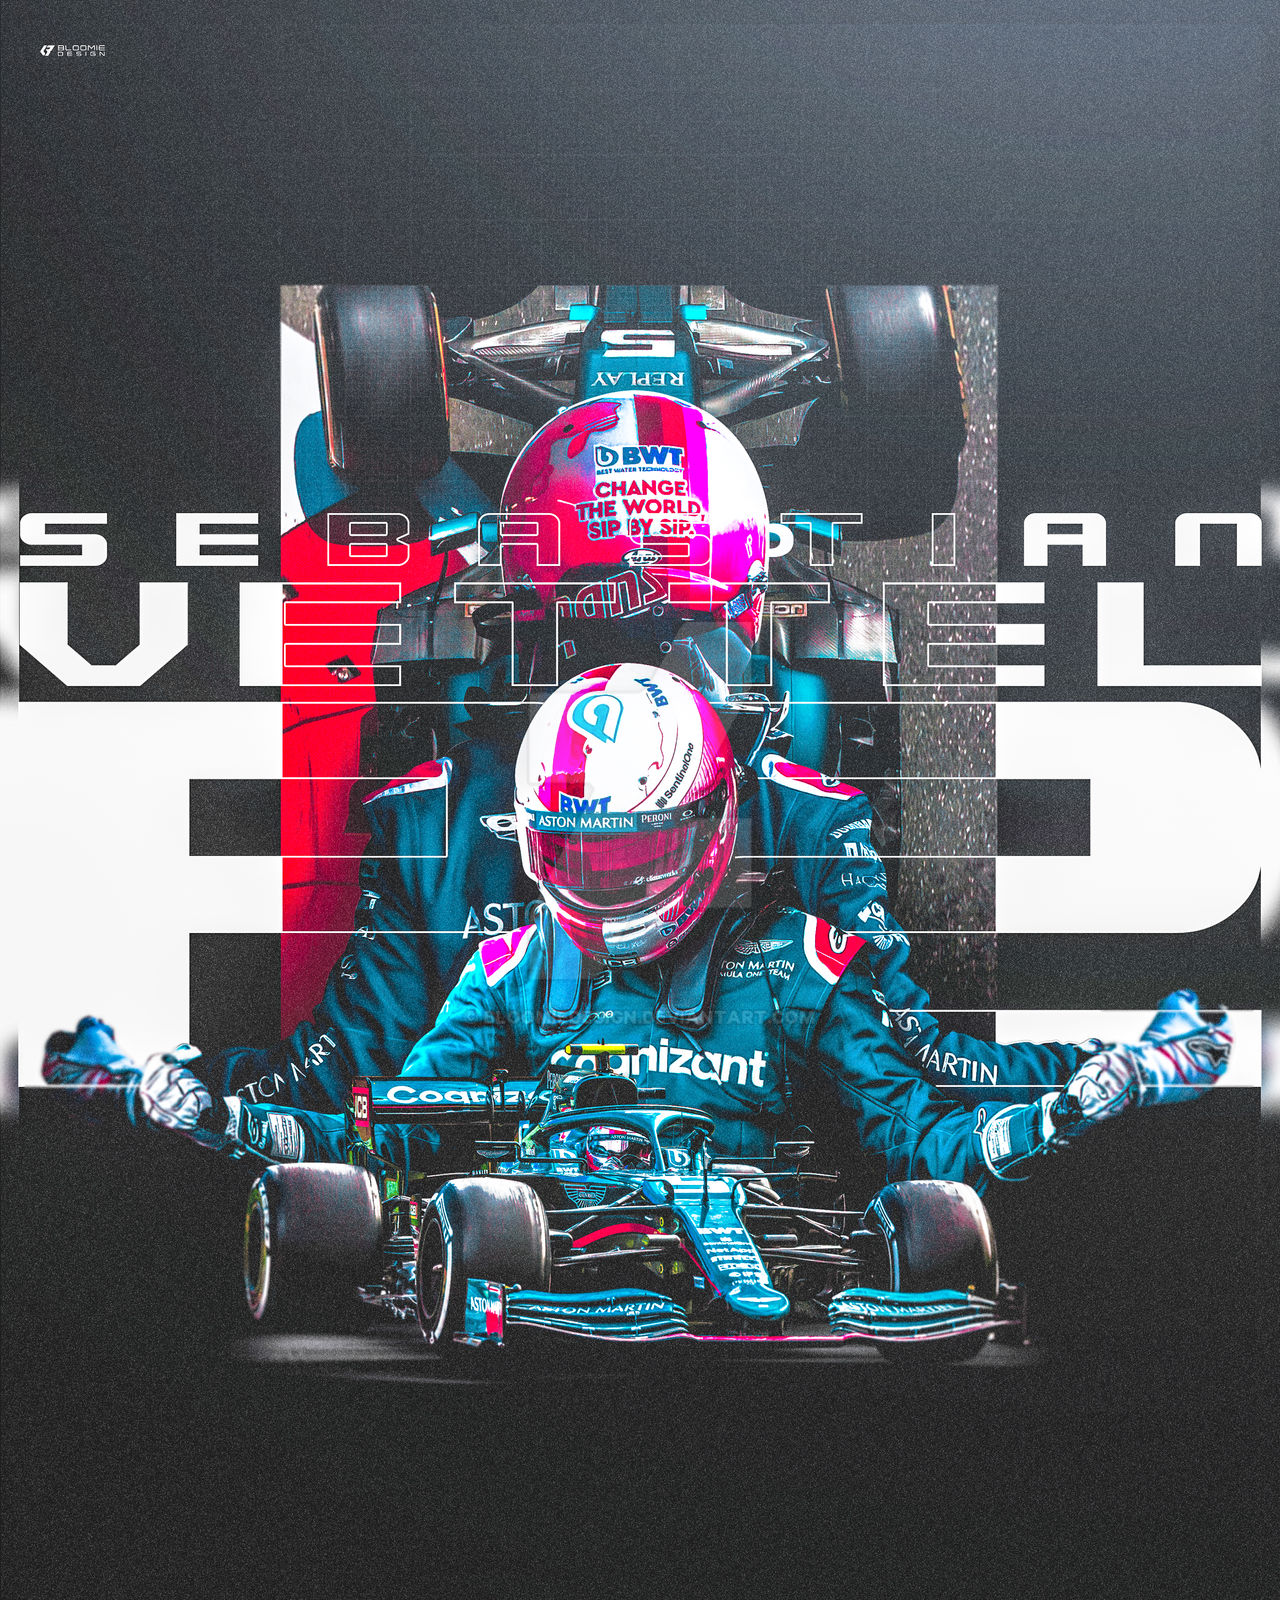 2021 F1 Monaco GP Trophy Poster by BloomieDesign on DeviantArt